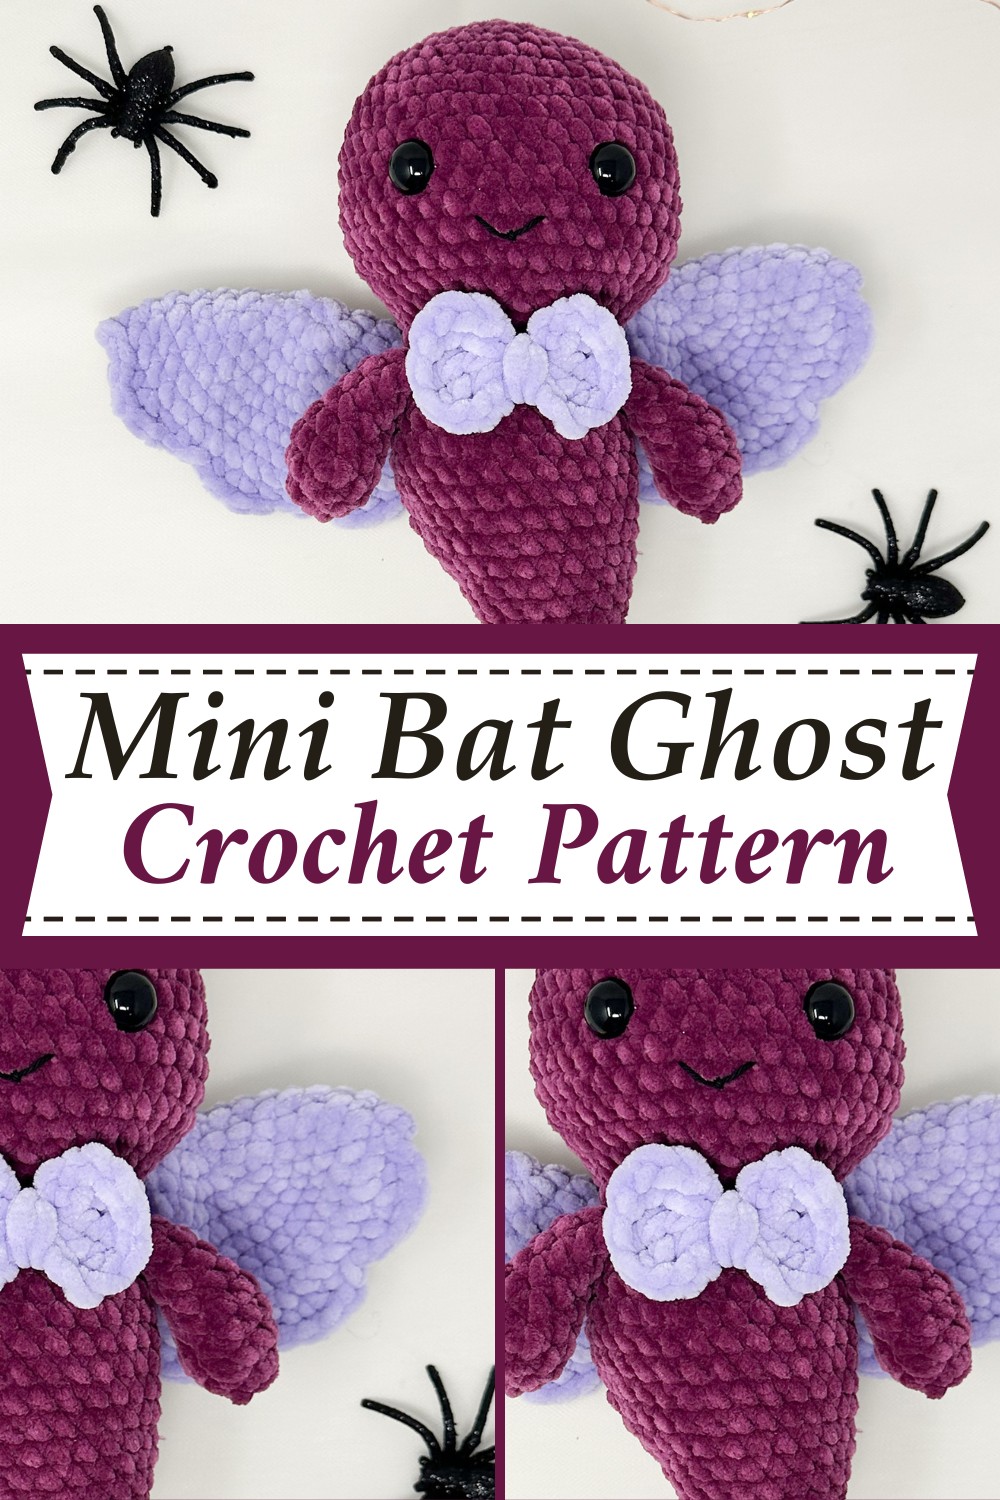 Mini Bat Ghost Crochet Pattern